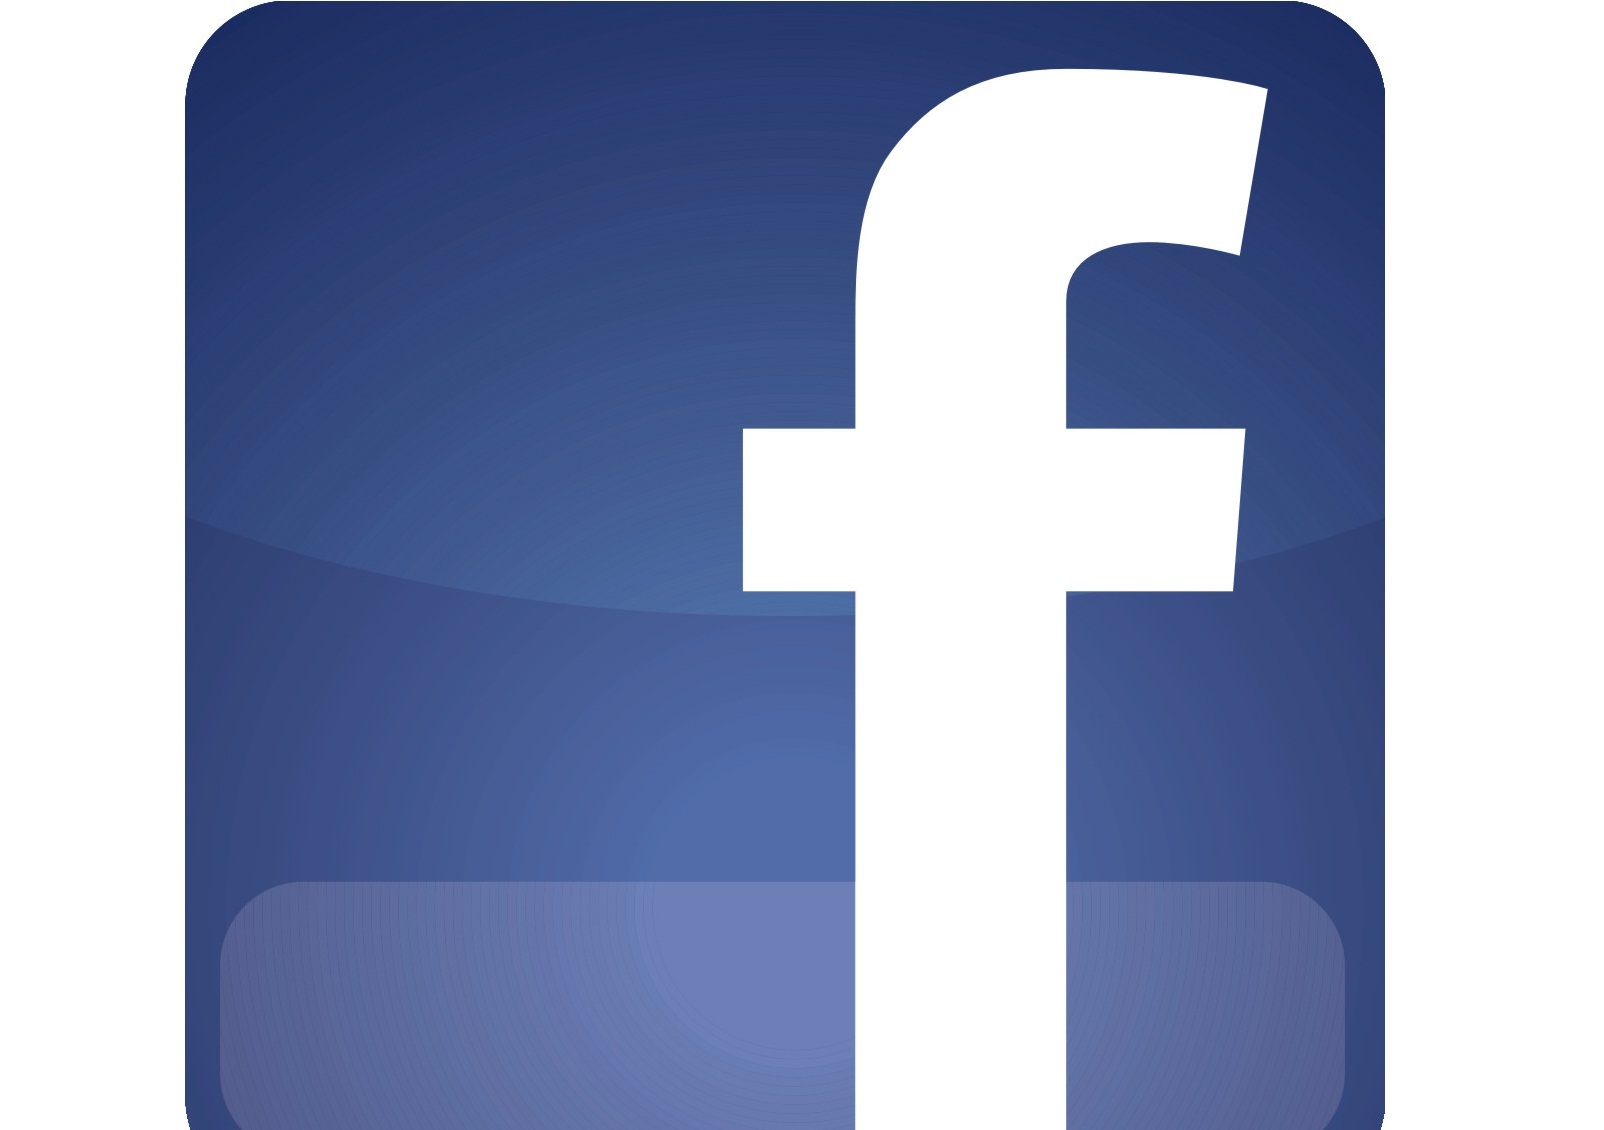 Snag takes Facebook down across world